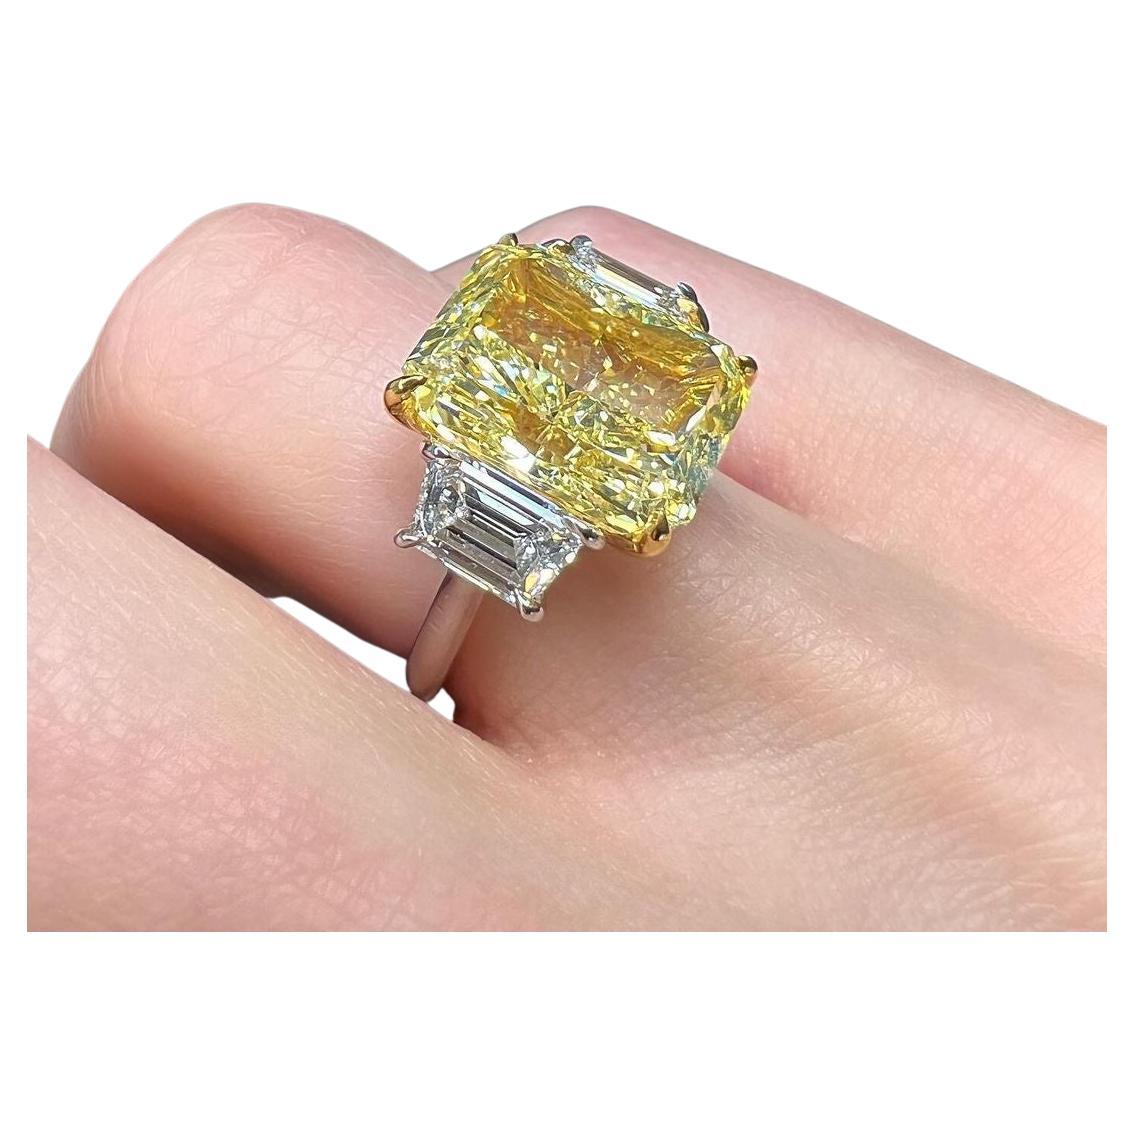 Ce diamant radiant de couleur jaune vif est offert par Antinori di Sanpietro ROMA. Ce diamant radiant de 4 carats de couleur jaune clair est serti sur mesure dans une bague artisanale Antinori di Sanpietro ROMA en platine et or jaune 18 carats.